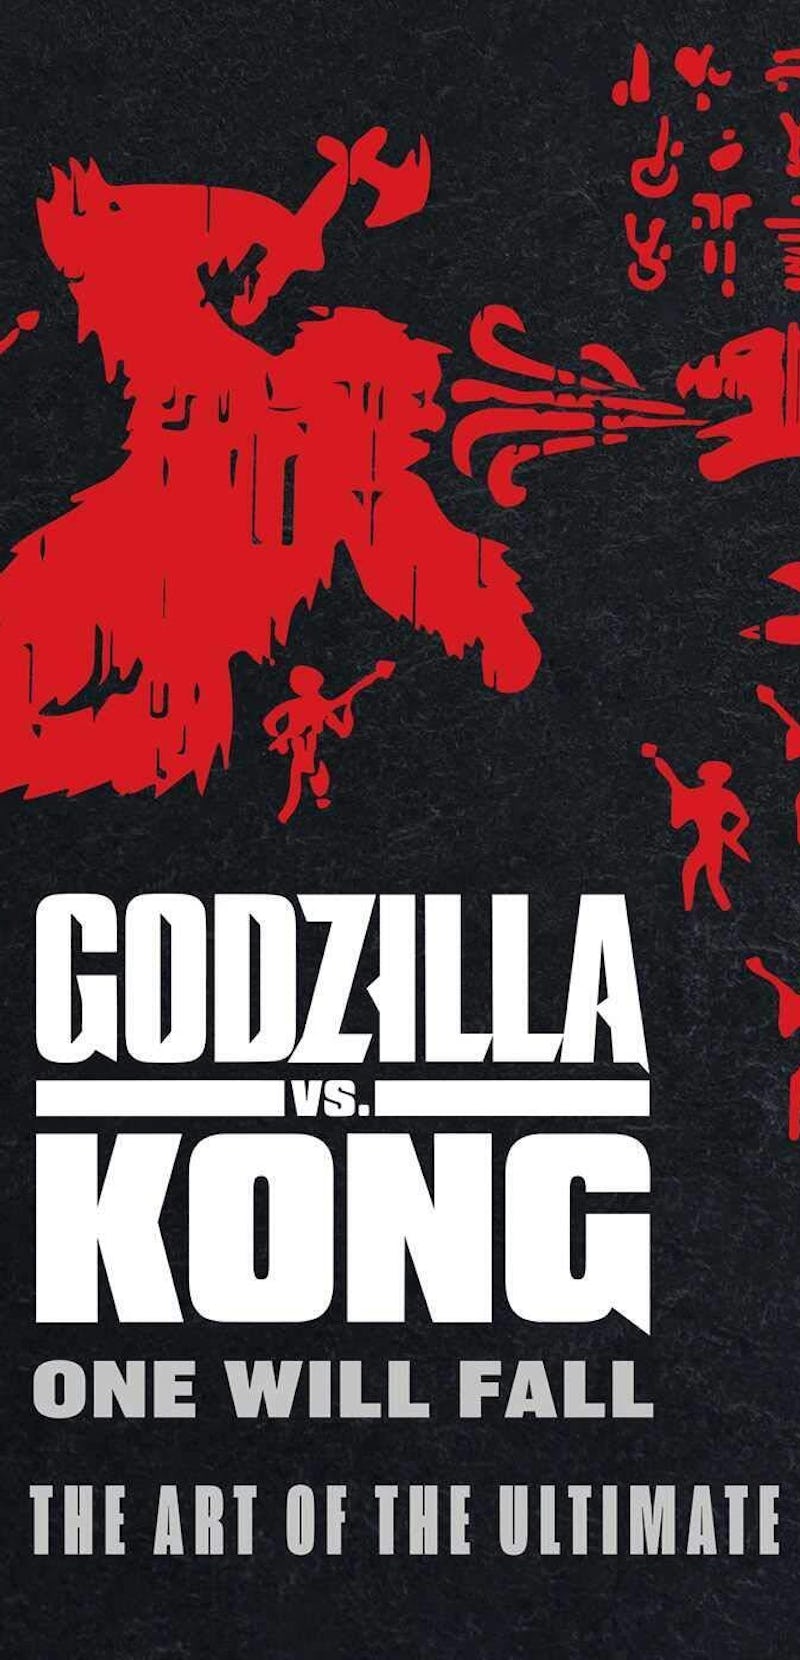 godzilla vs kong concept art featuring illustrations of both monsters